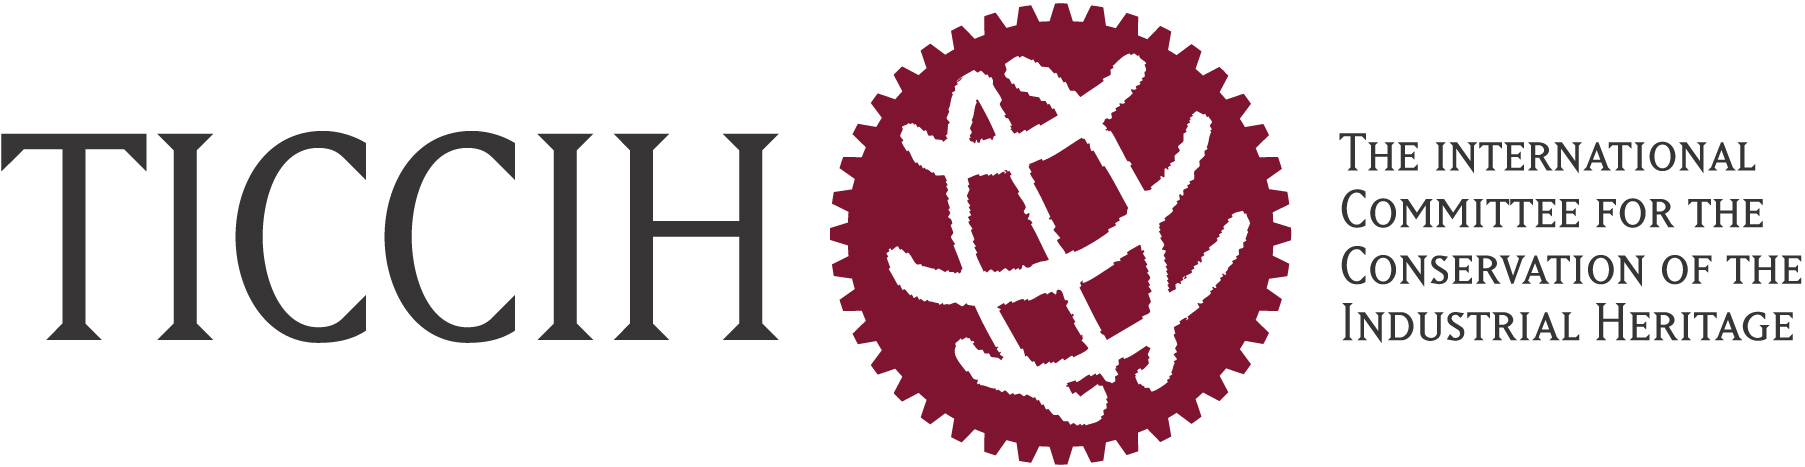 Logo TICCIH 2